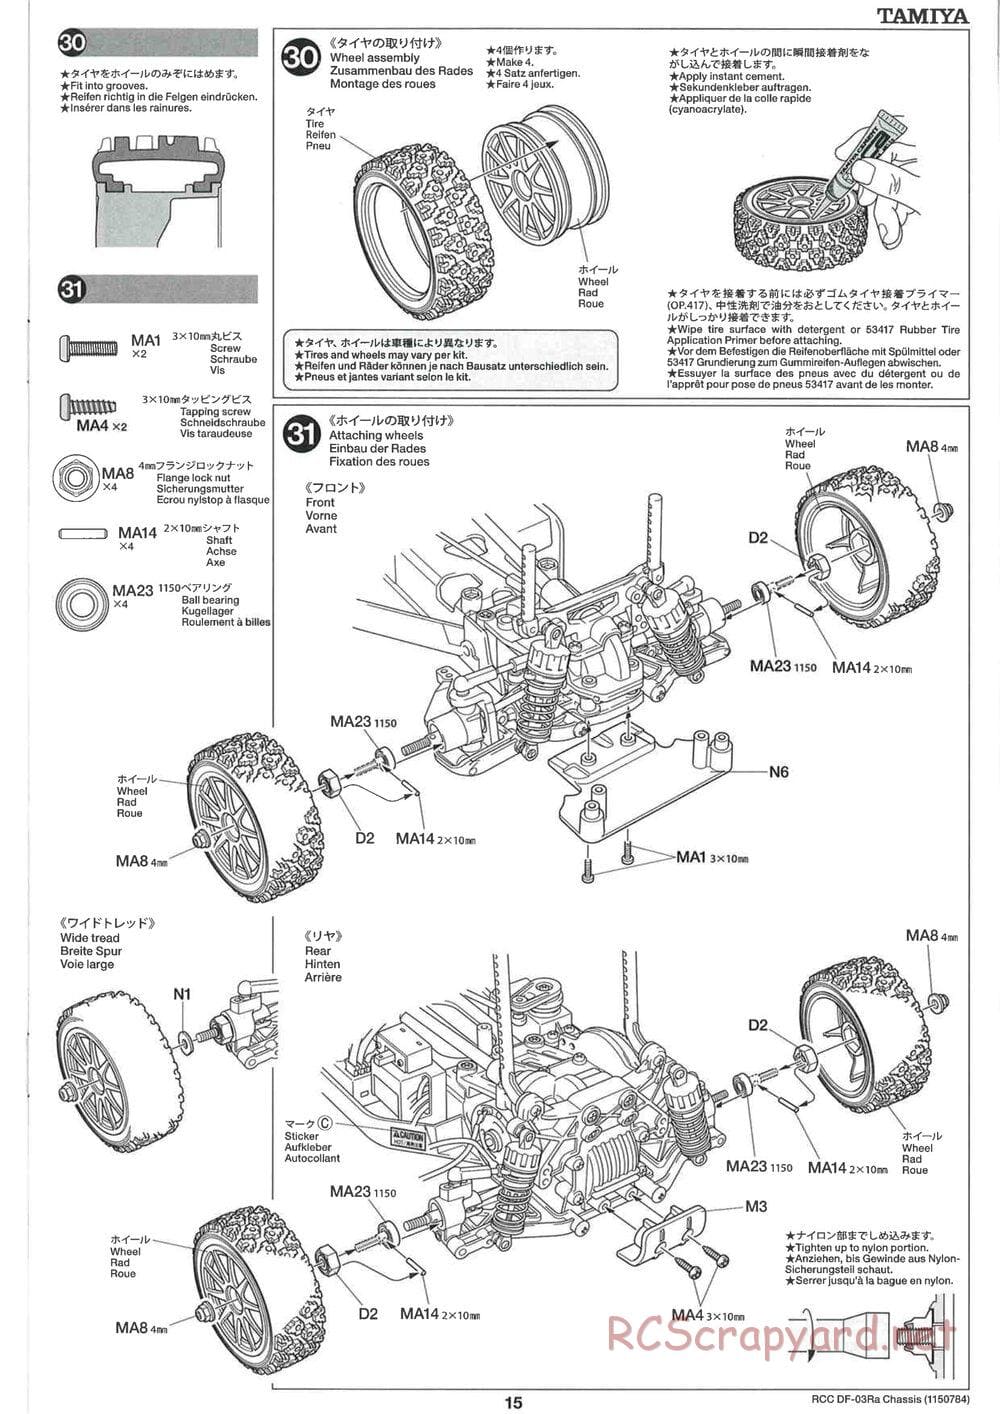 Tamiya - DF-03Ra Chassis - Manual - Page 15